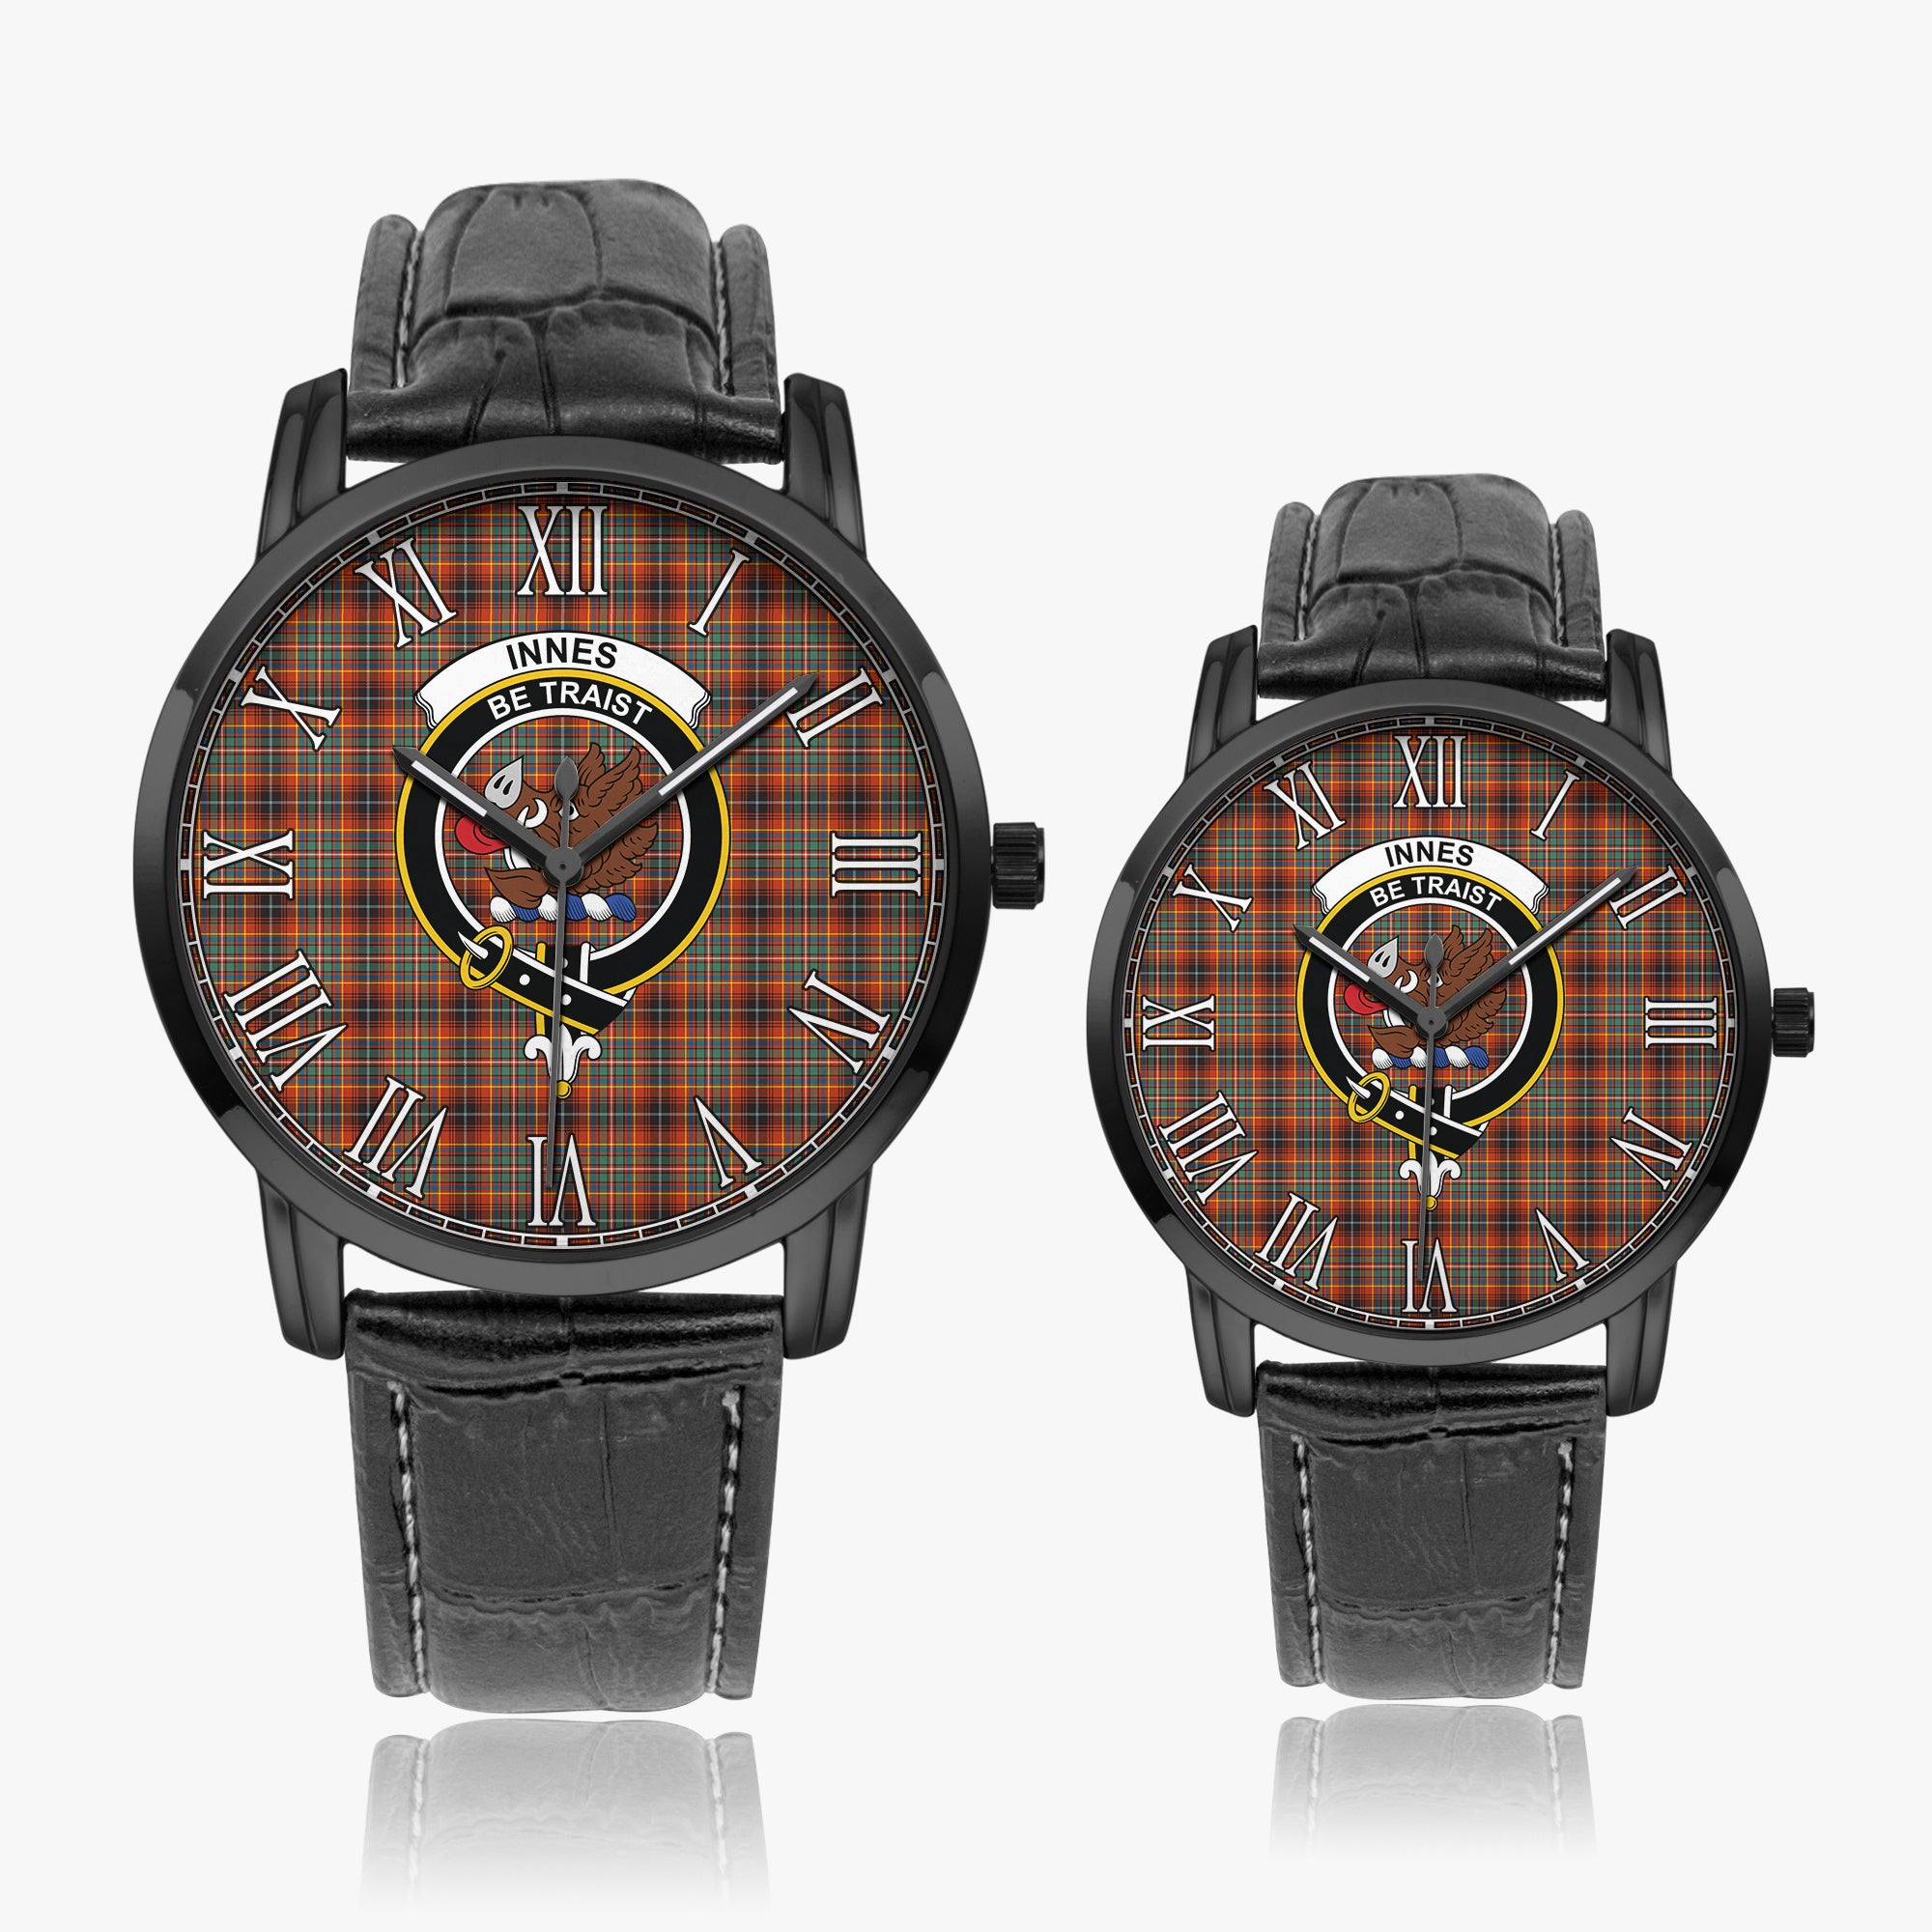 innes-ancient-family-crest-quartz-watch-with-leather-strap-tartan-instafamous-quartz-leather-strap-watch